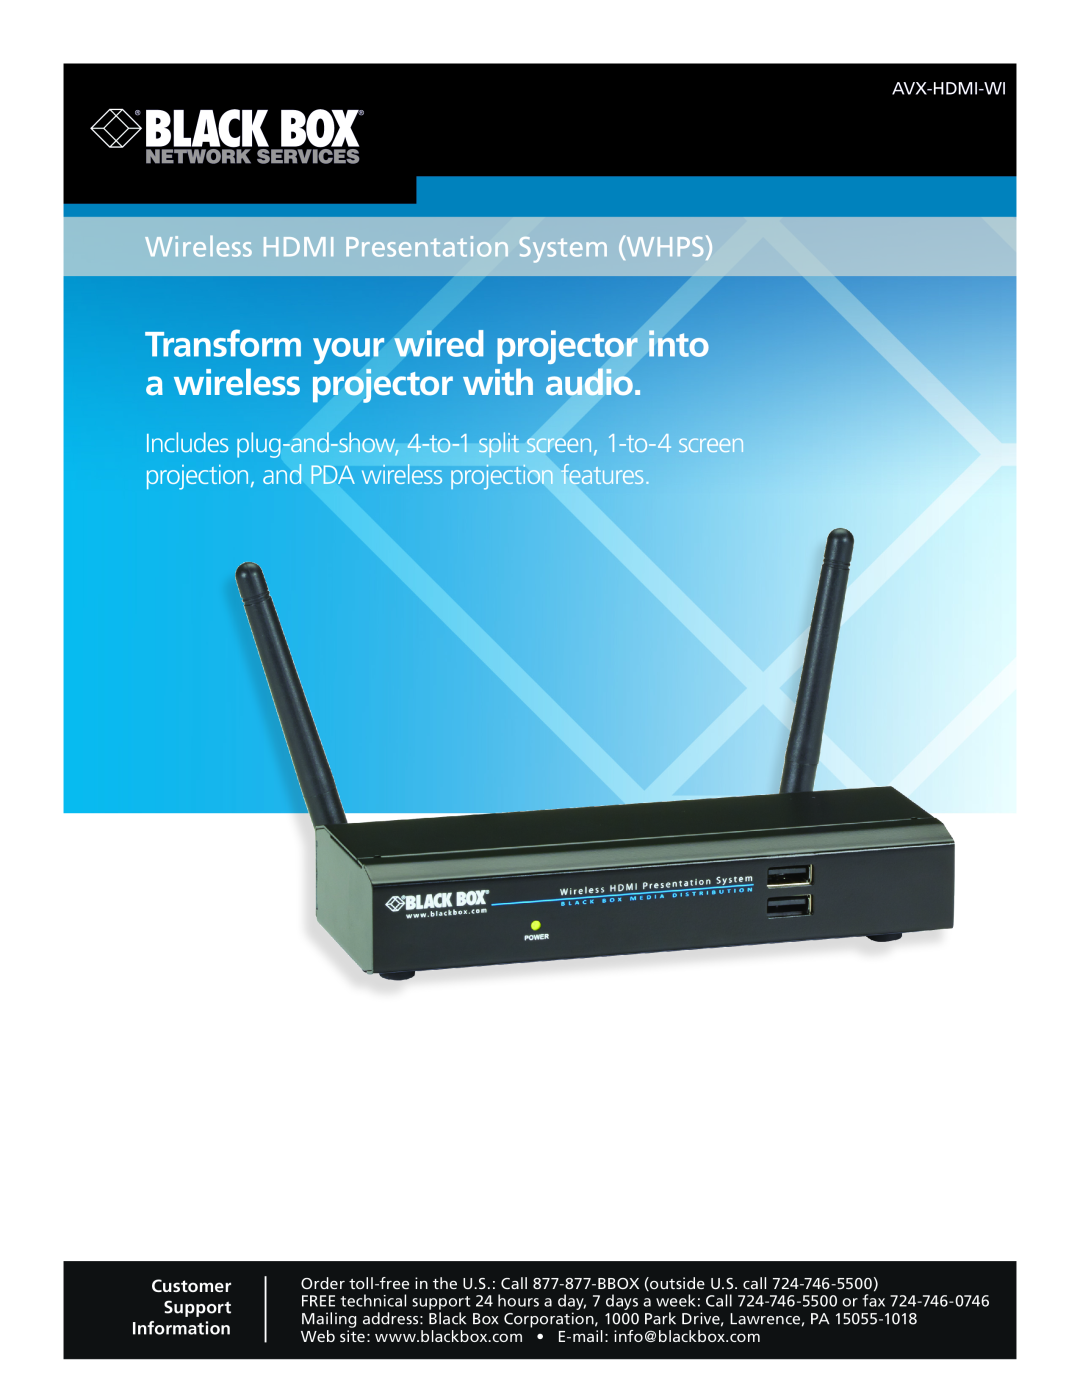 Black Box Wireless HDMI Presentation System (WHPS), AVX-HDMI-WI manual Wireless HDMI Presentation System WHPS, Avx-Hdmi-Wi 